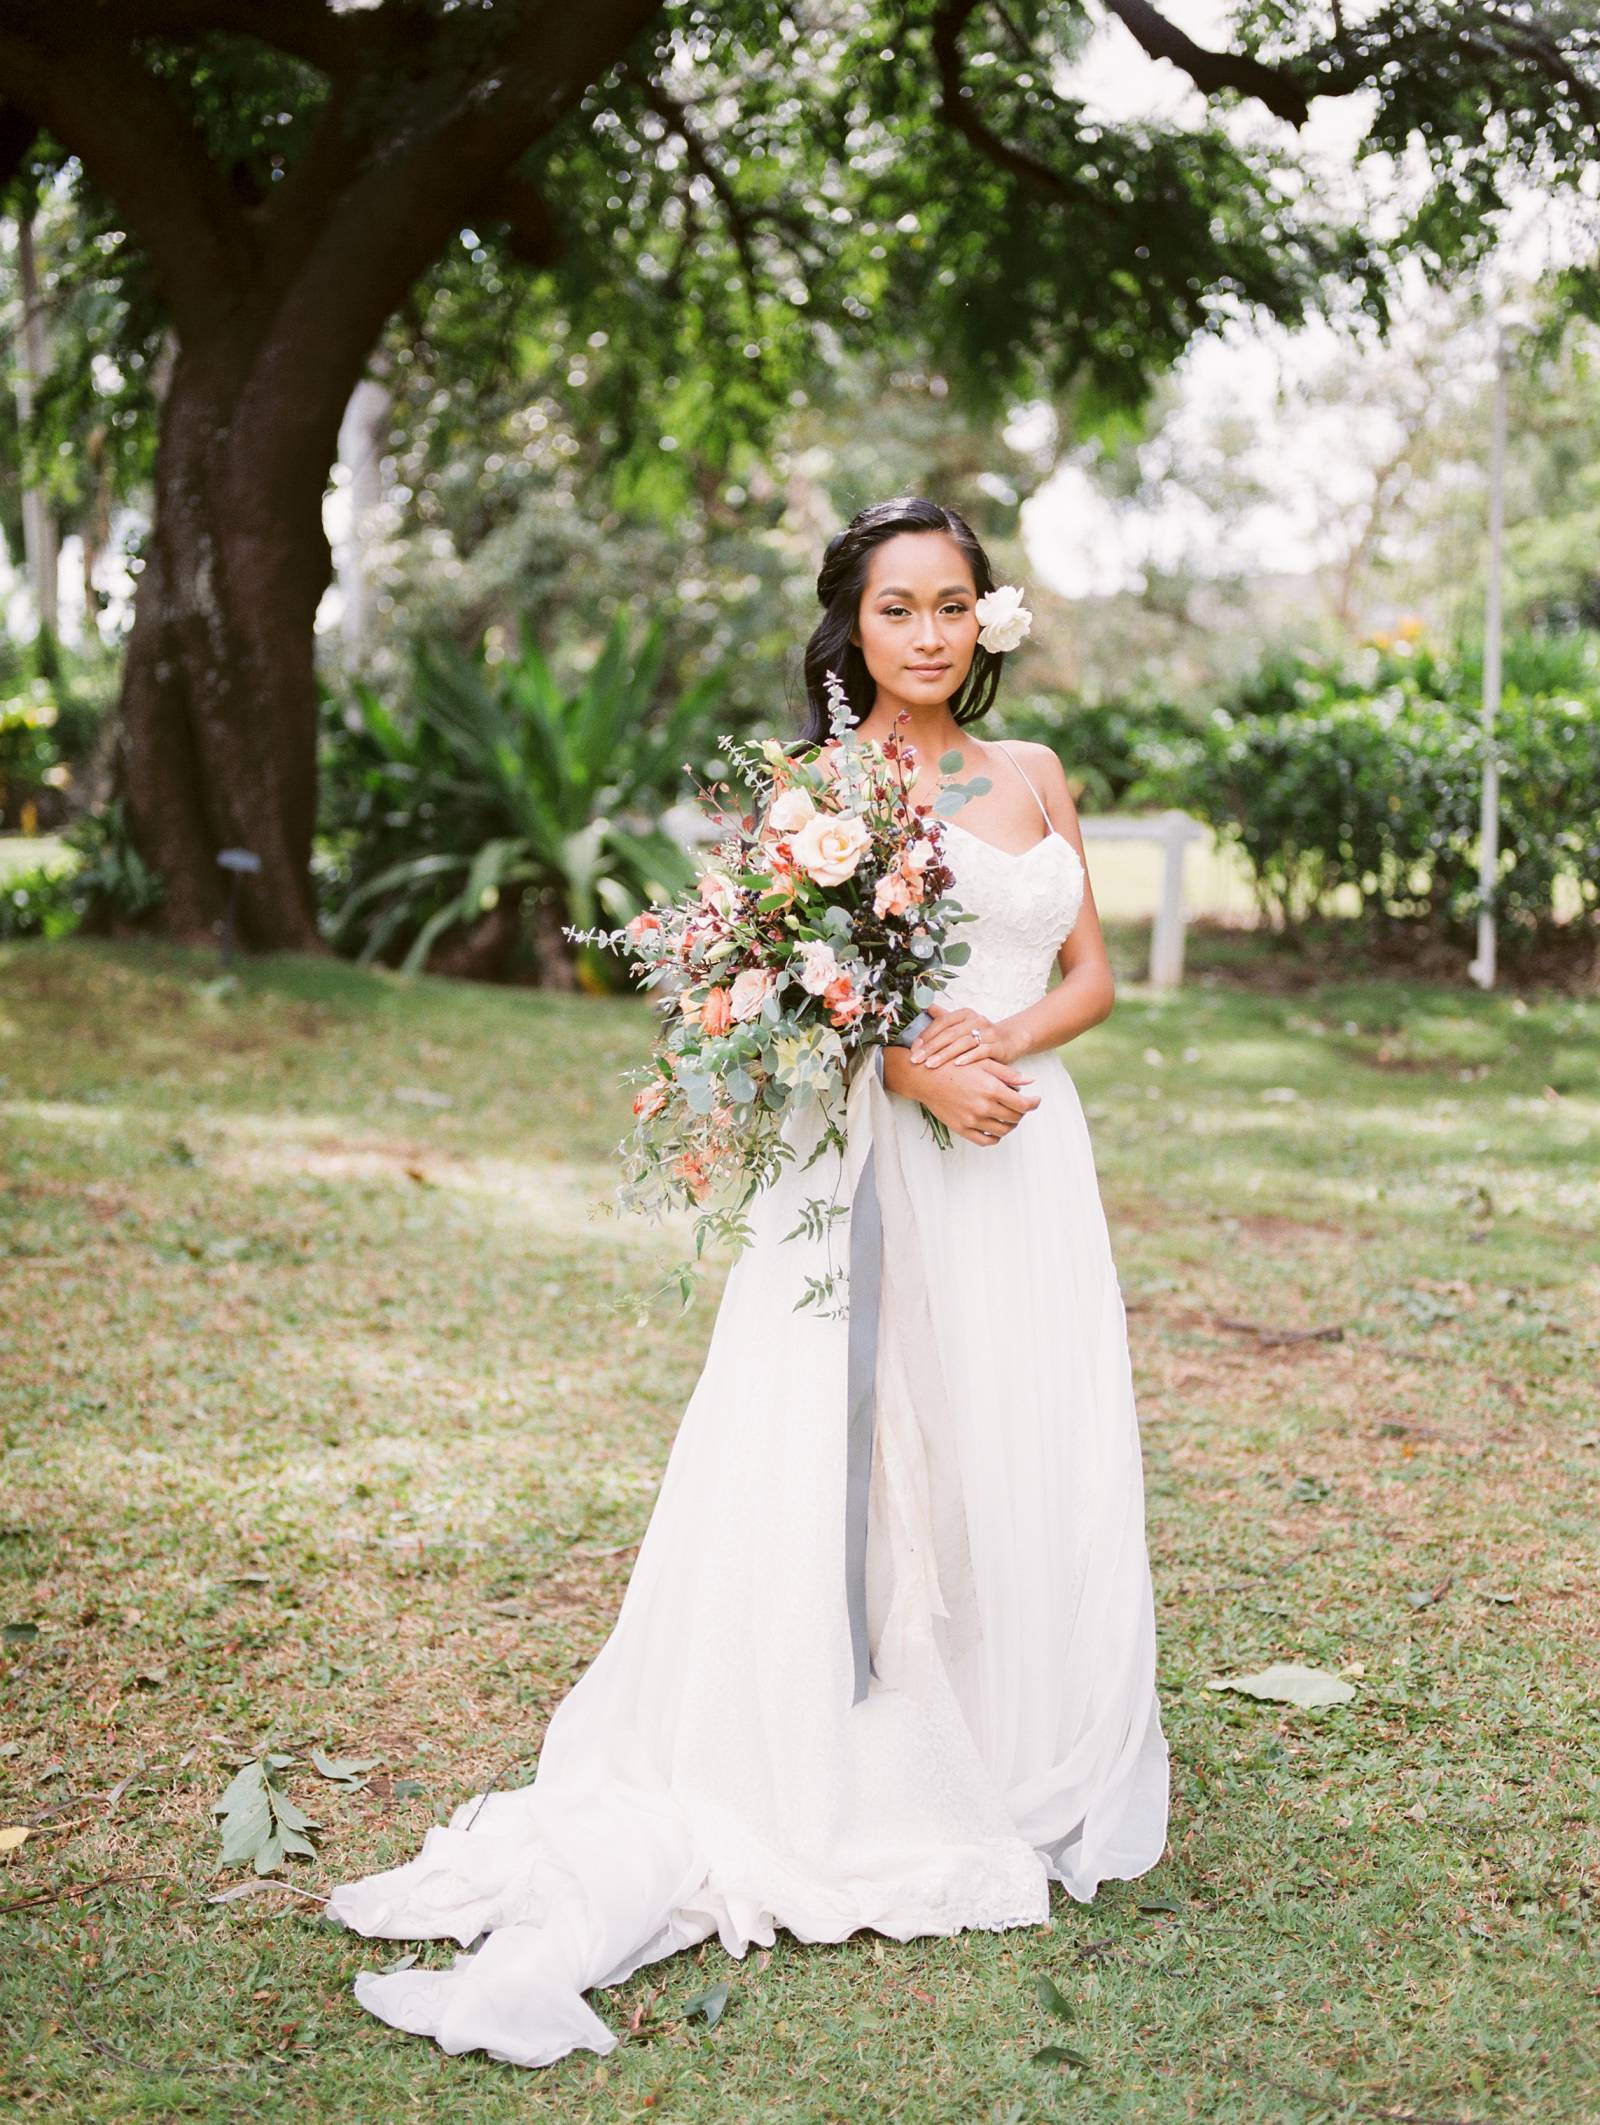 Modern tropical wedding style from Maui | Hawaii Wedding Inspiration